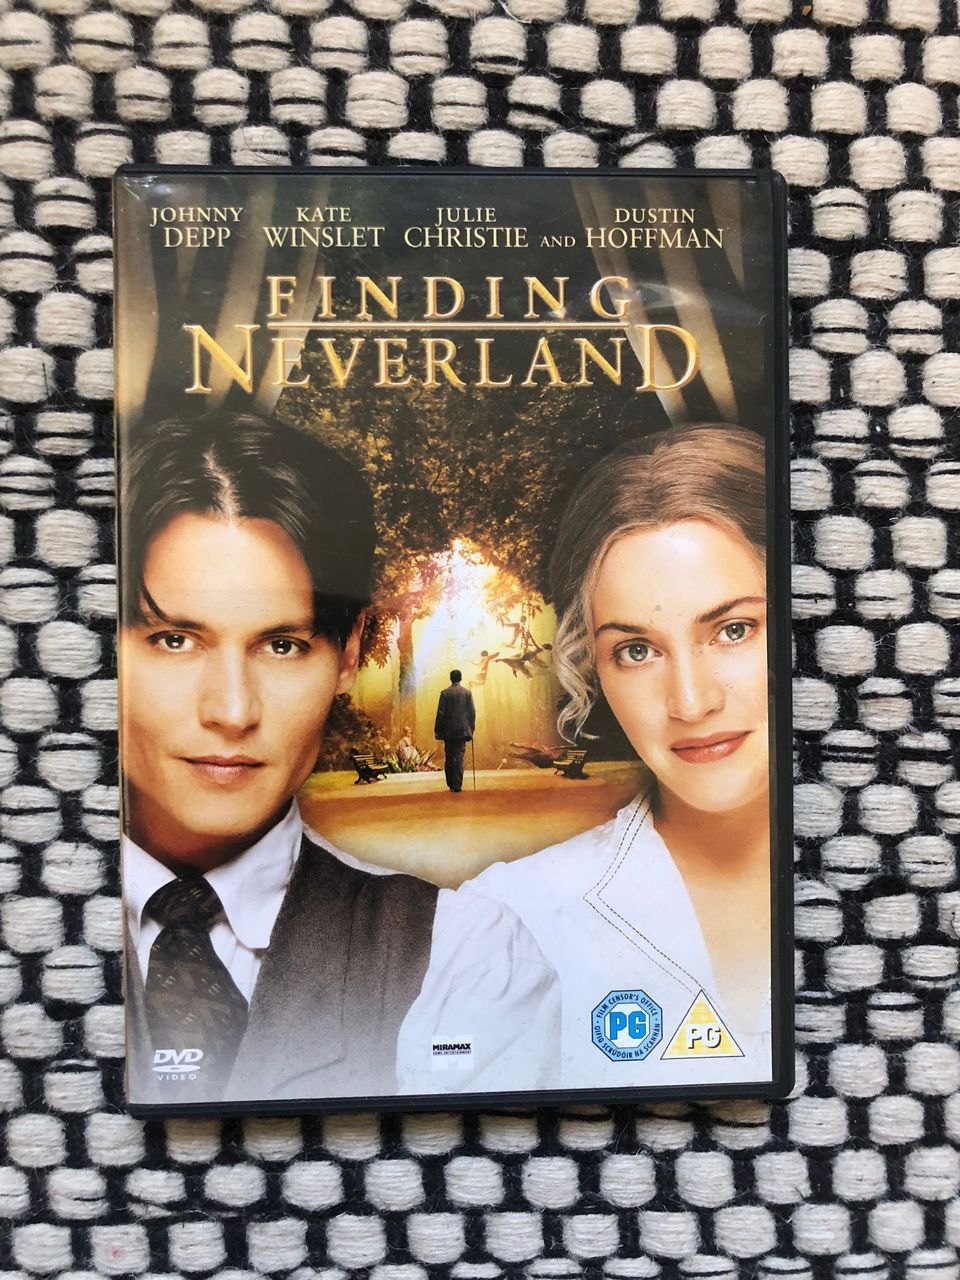 Finding neverland dvd